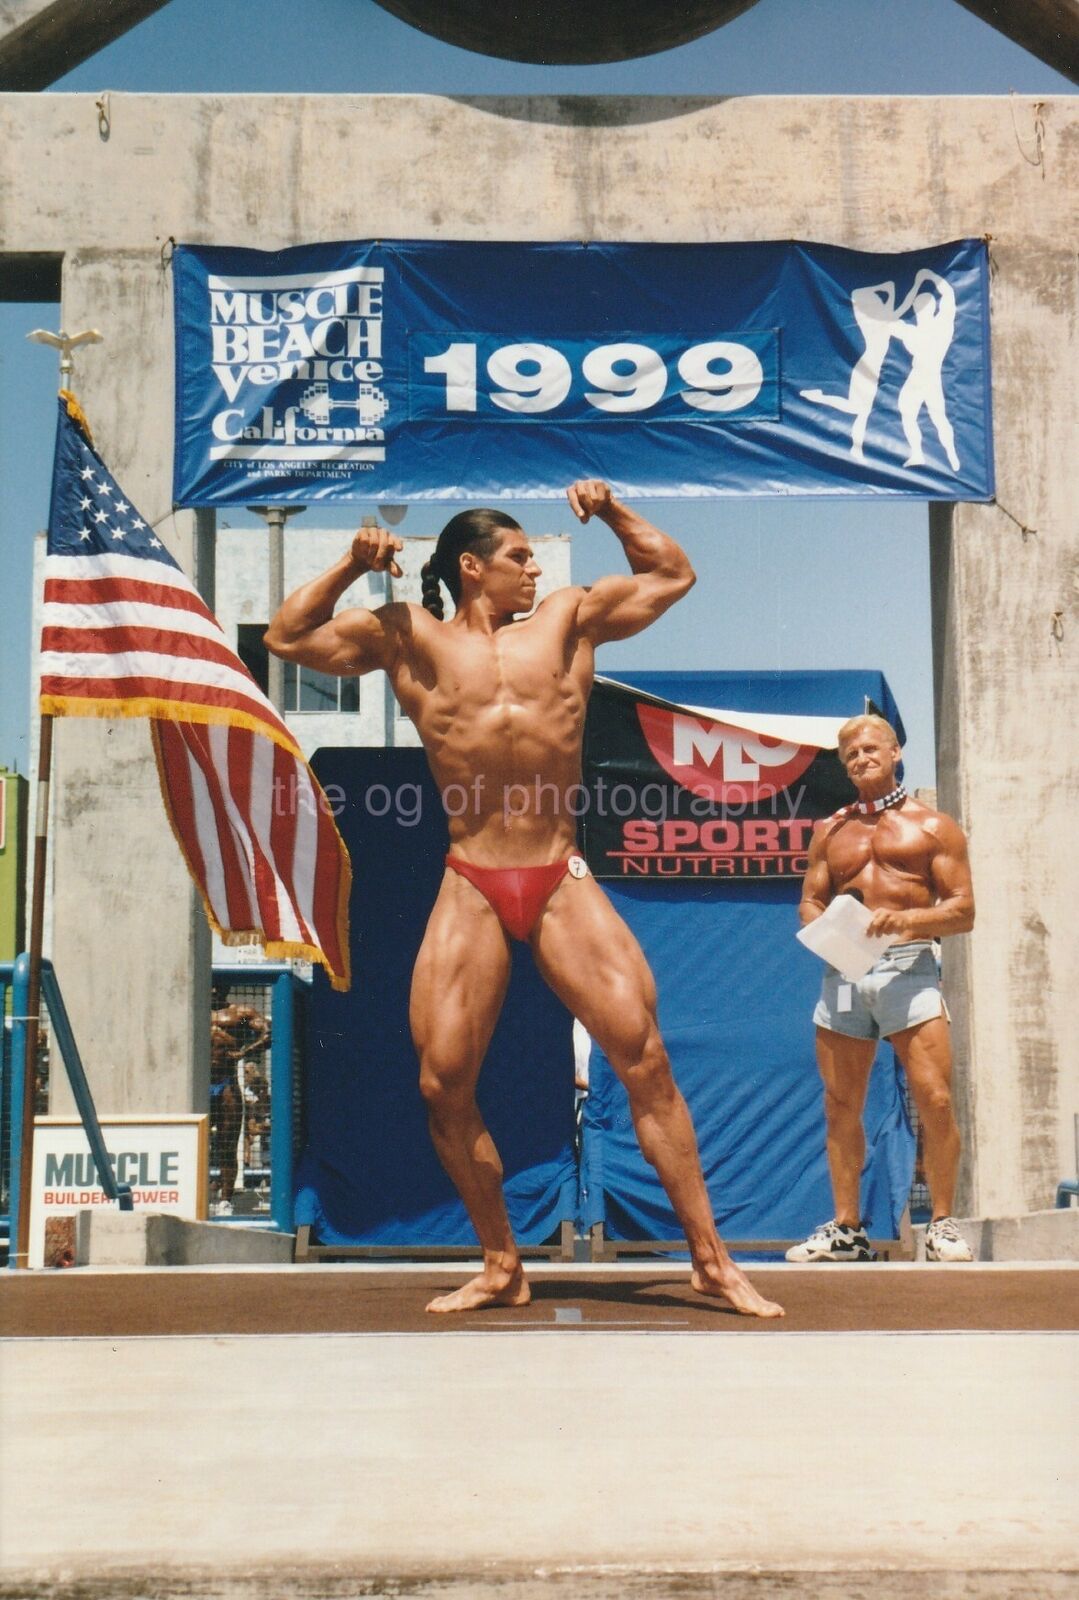 MUSCLE MAN Venice Beach California FOUND Photo Poster painting Bodybuilding Snapshot GUY 92 7 J